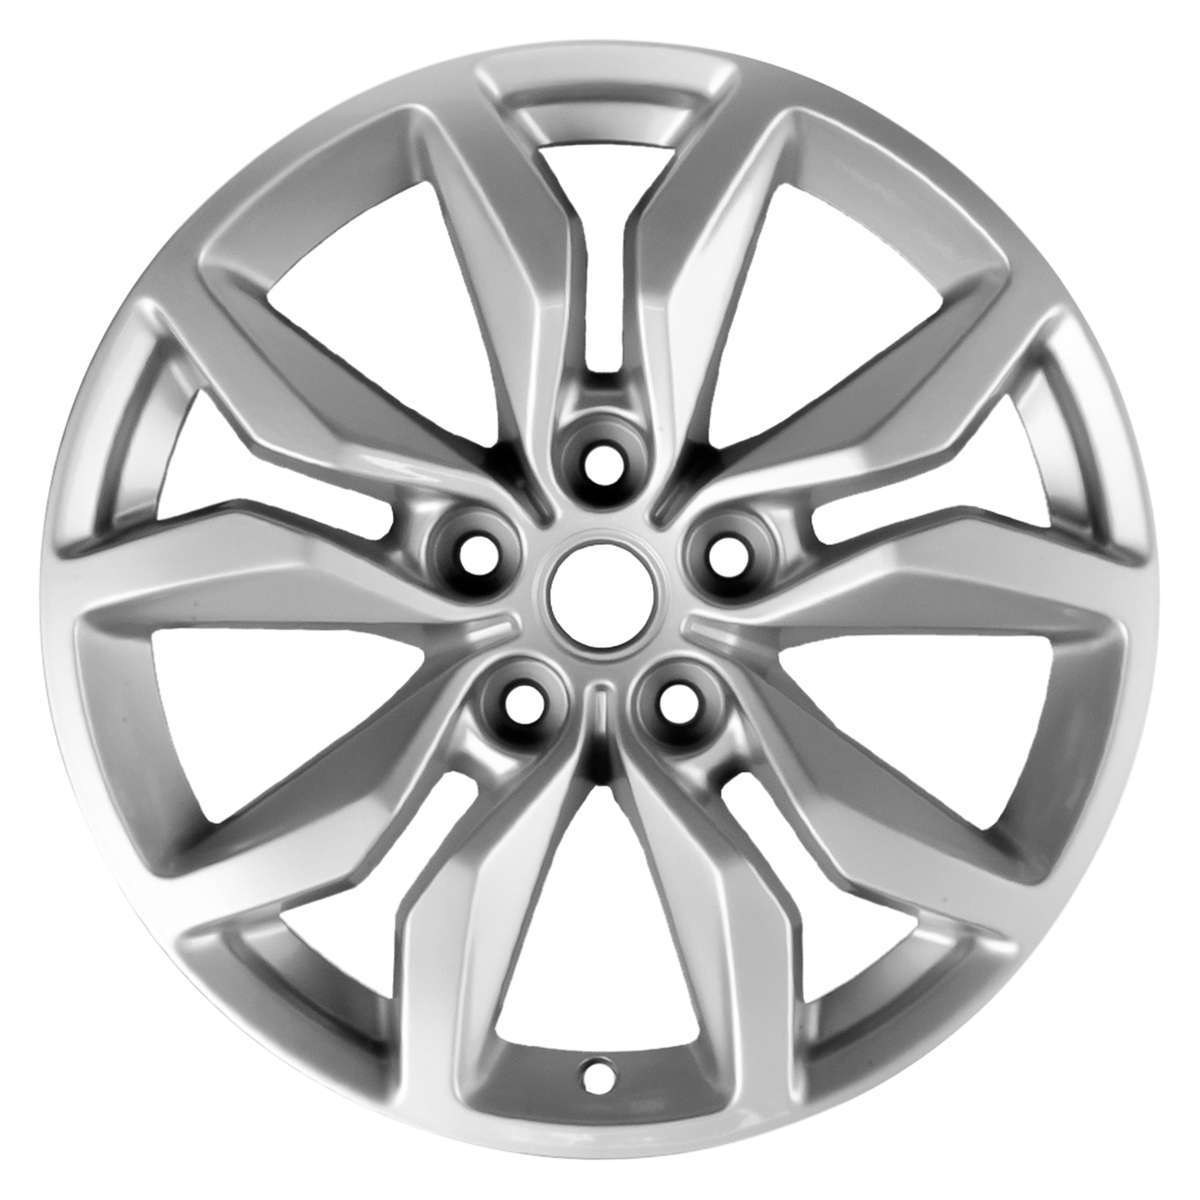 2017 Chevrolet Impala 18" OEM Wheel Rim W5712S